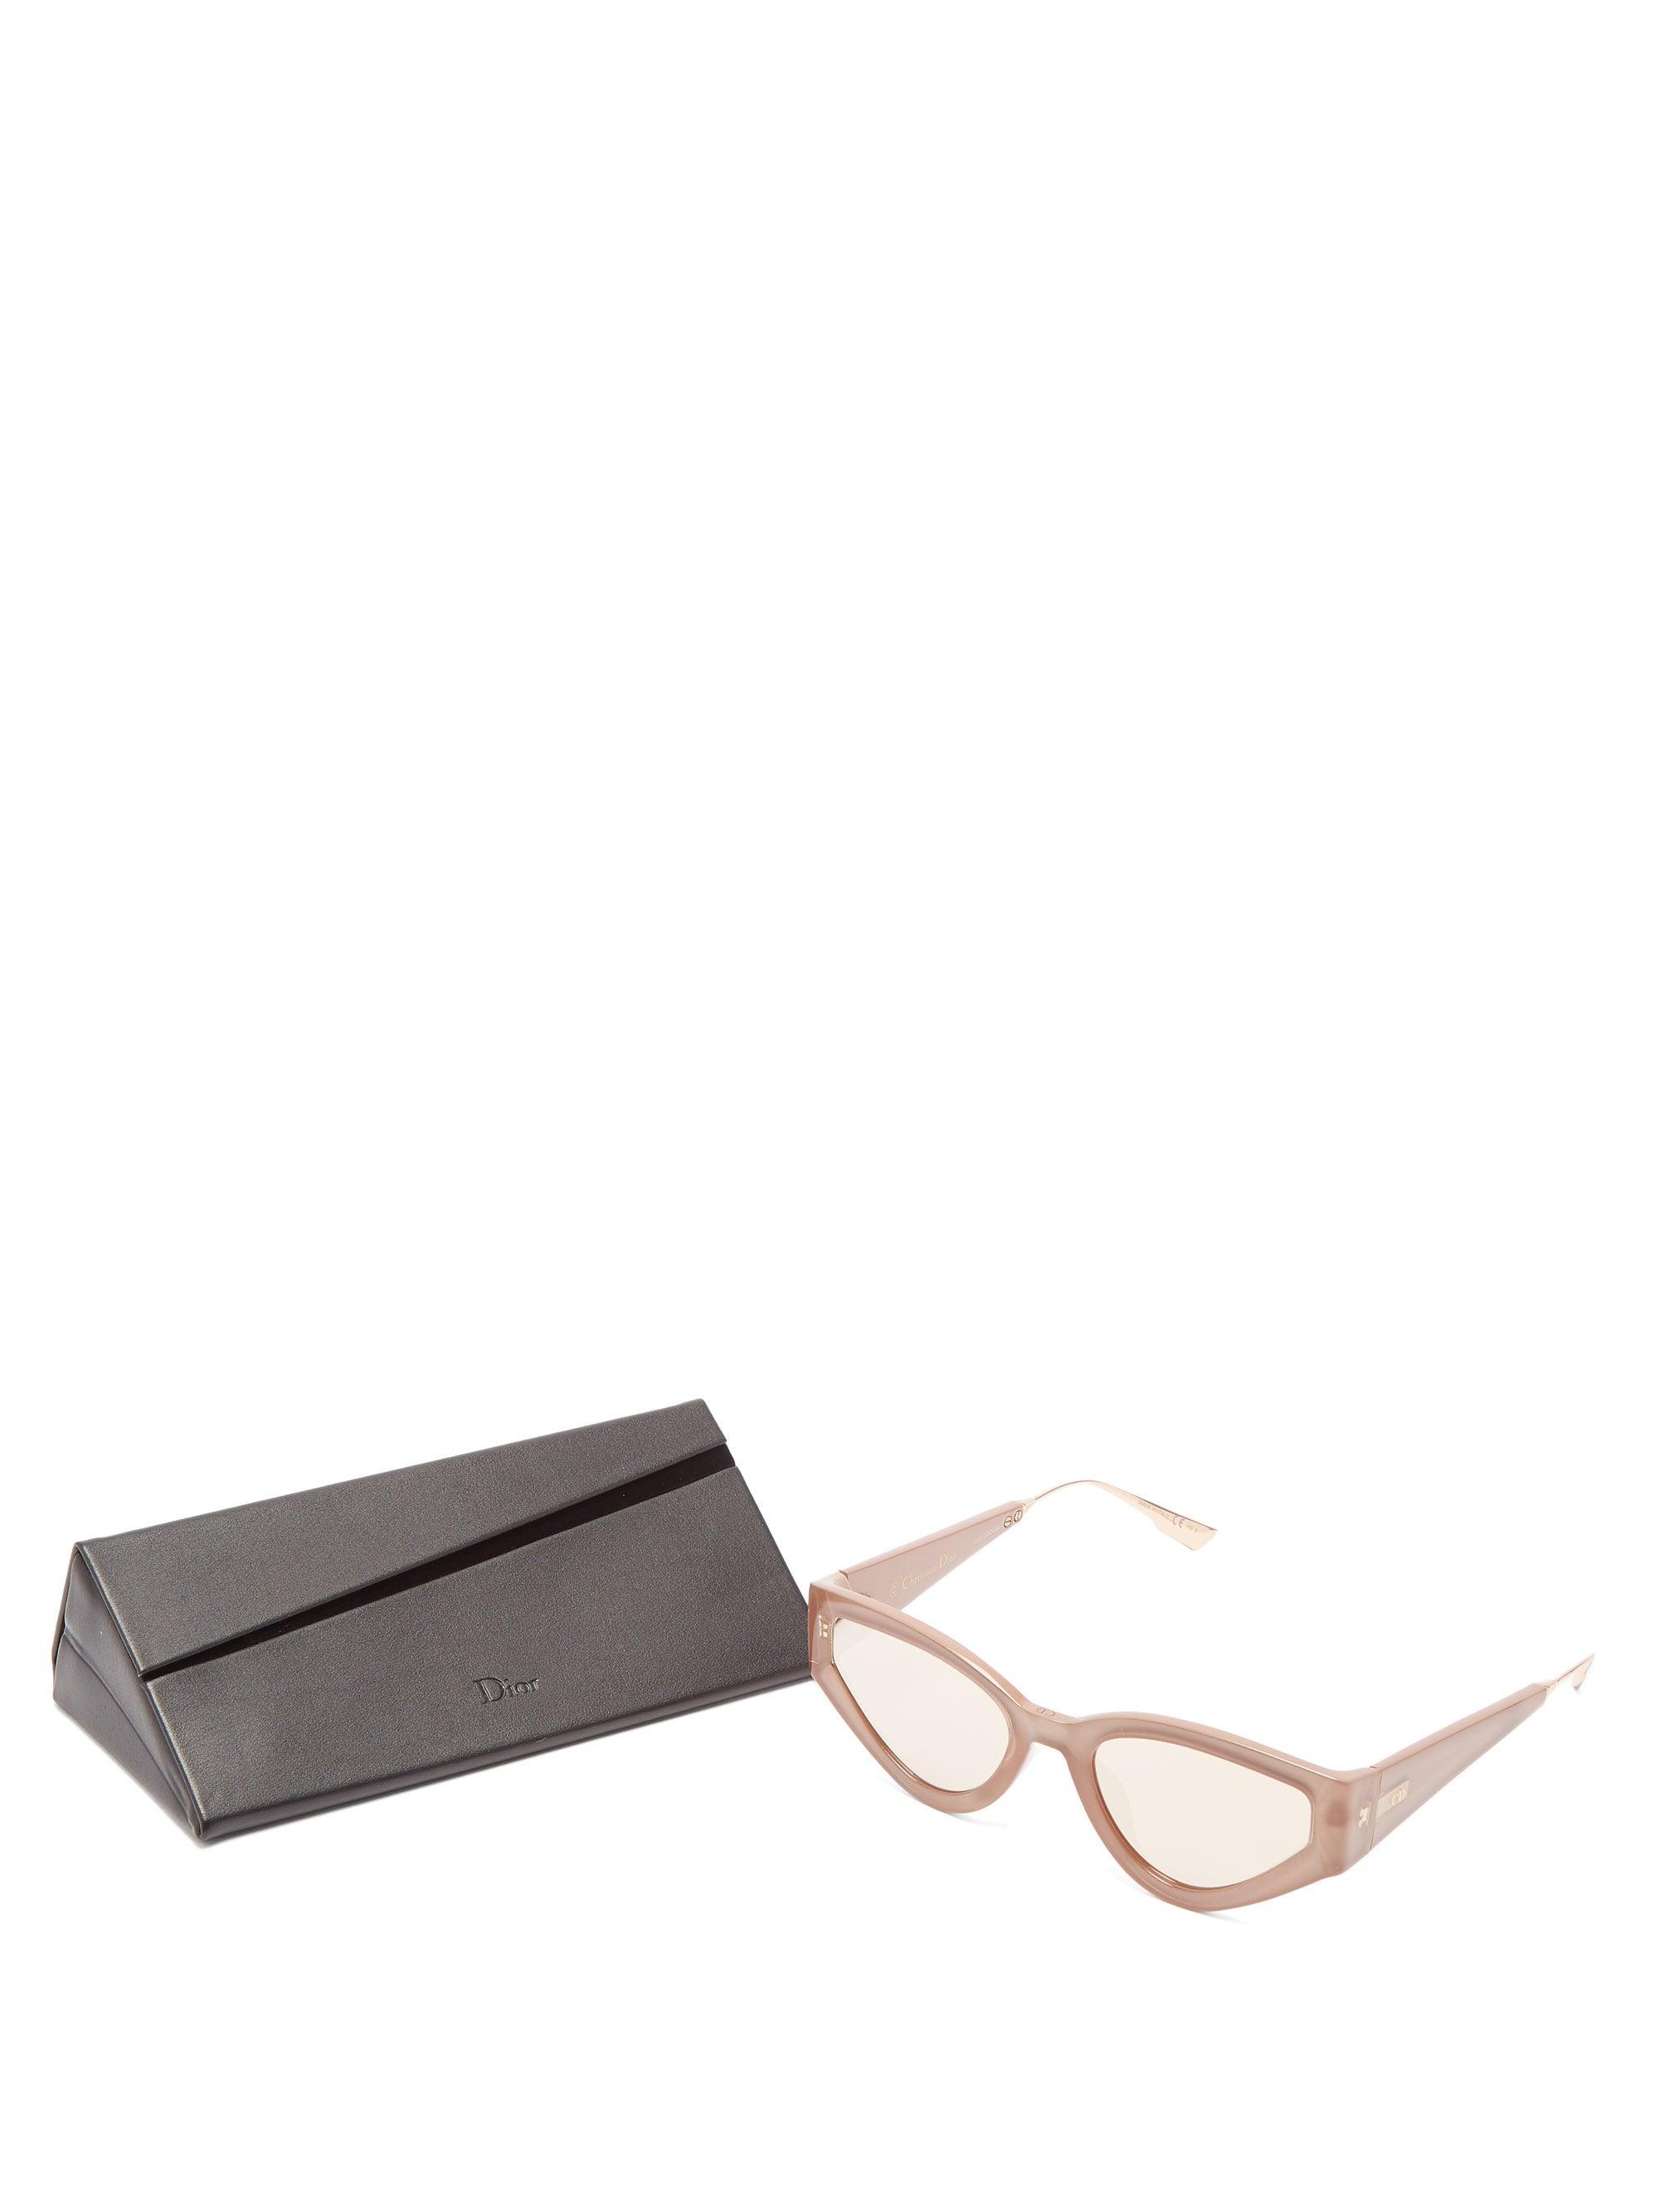 Dior Catstyledior1 Cat-eye Acetate Sunglasses in Light Brown 